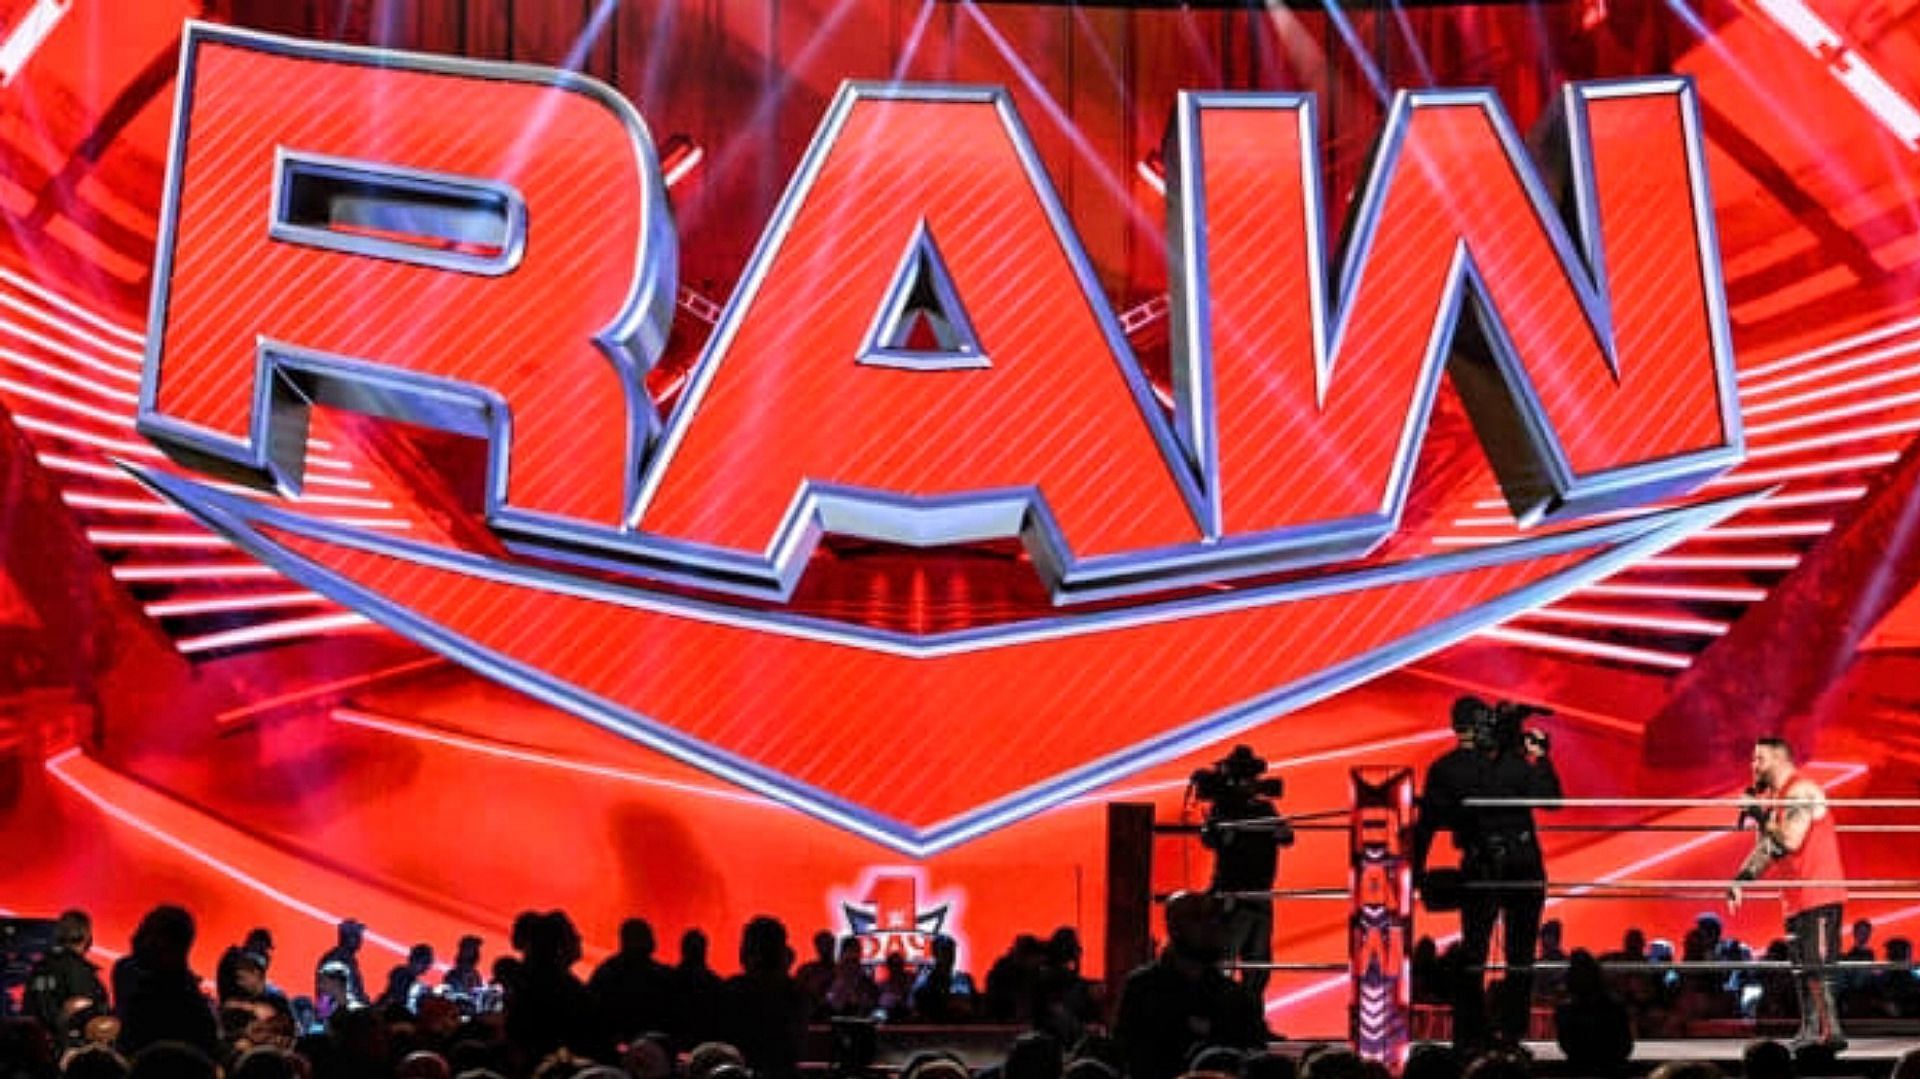 Monday Night Raw